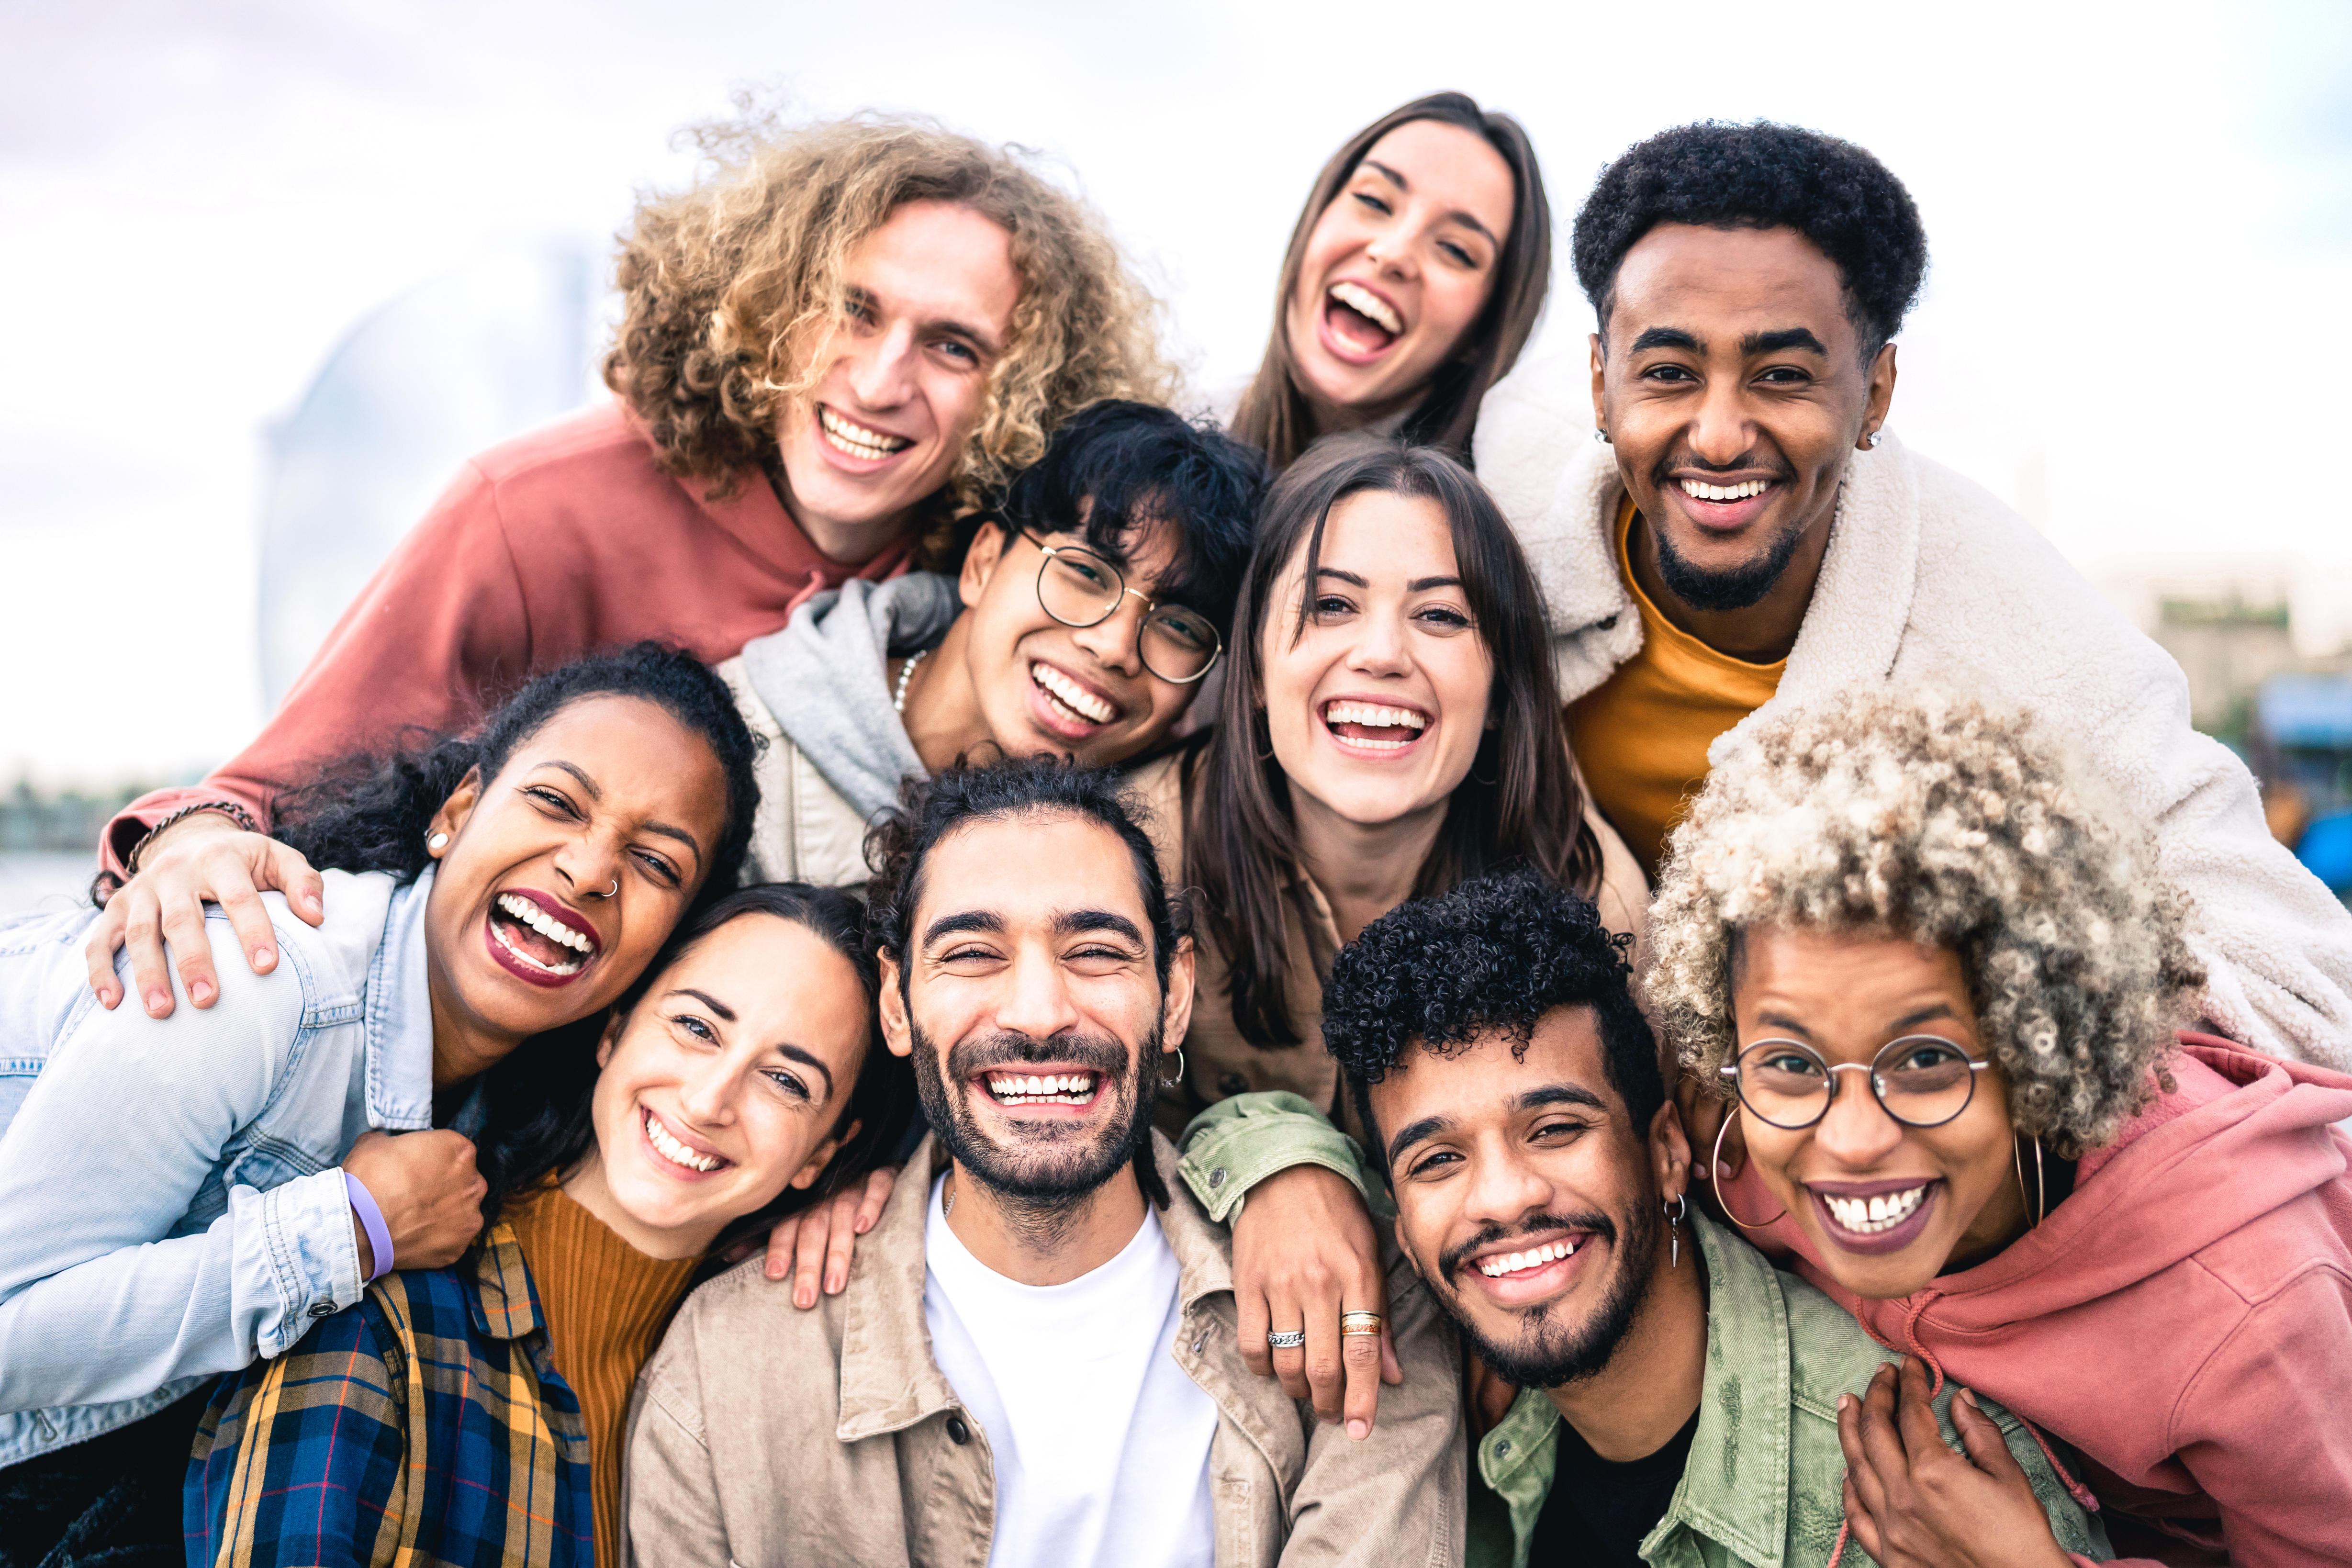 Image description: A diverse group of people smiling